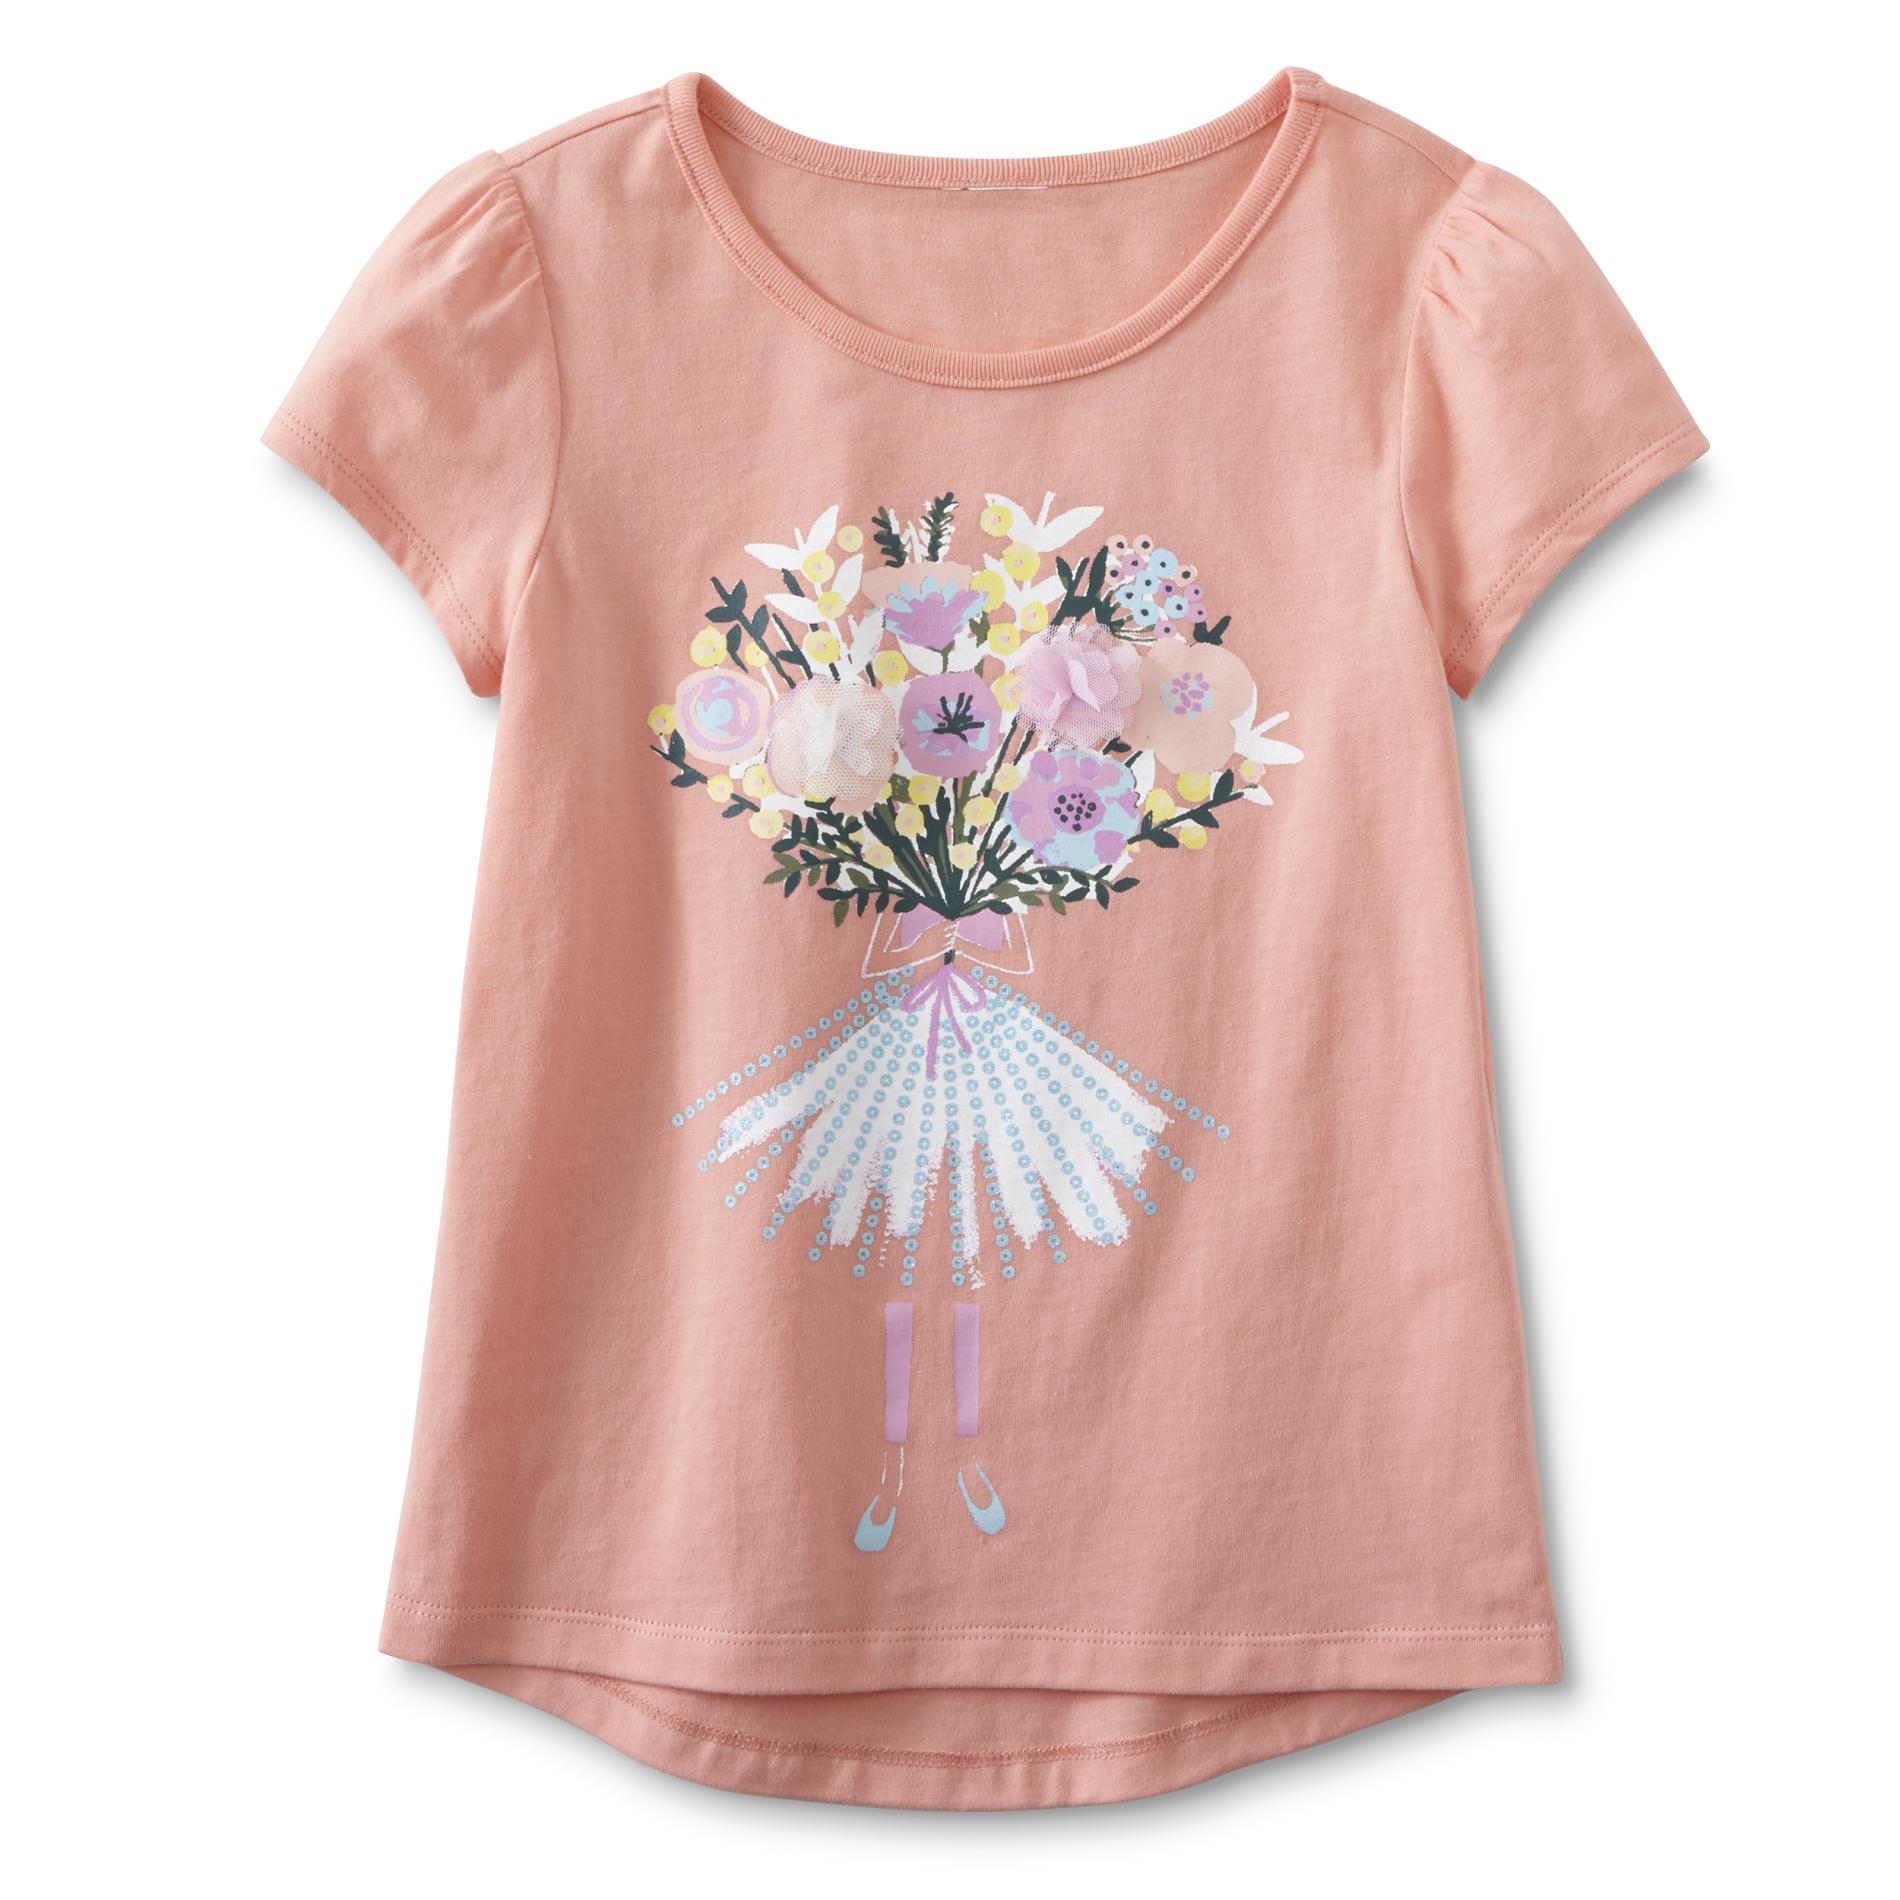 Toughskins Girls' Embellished T-Shirt - Flower Girl